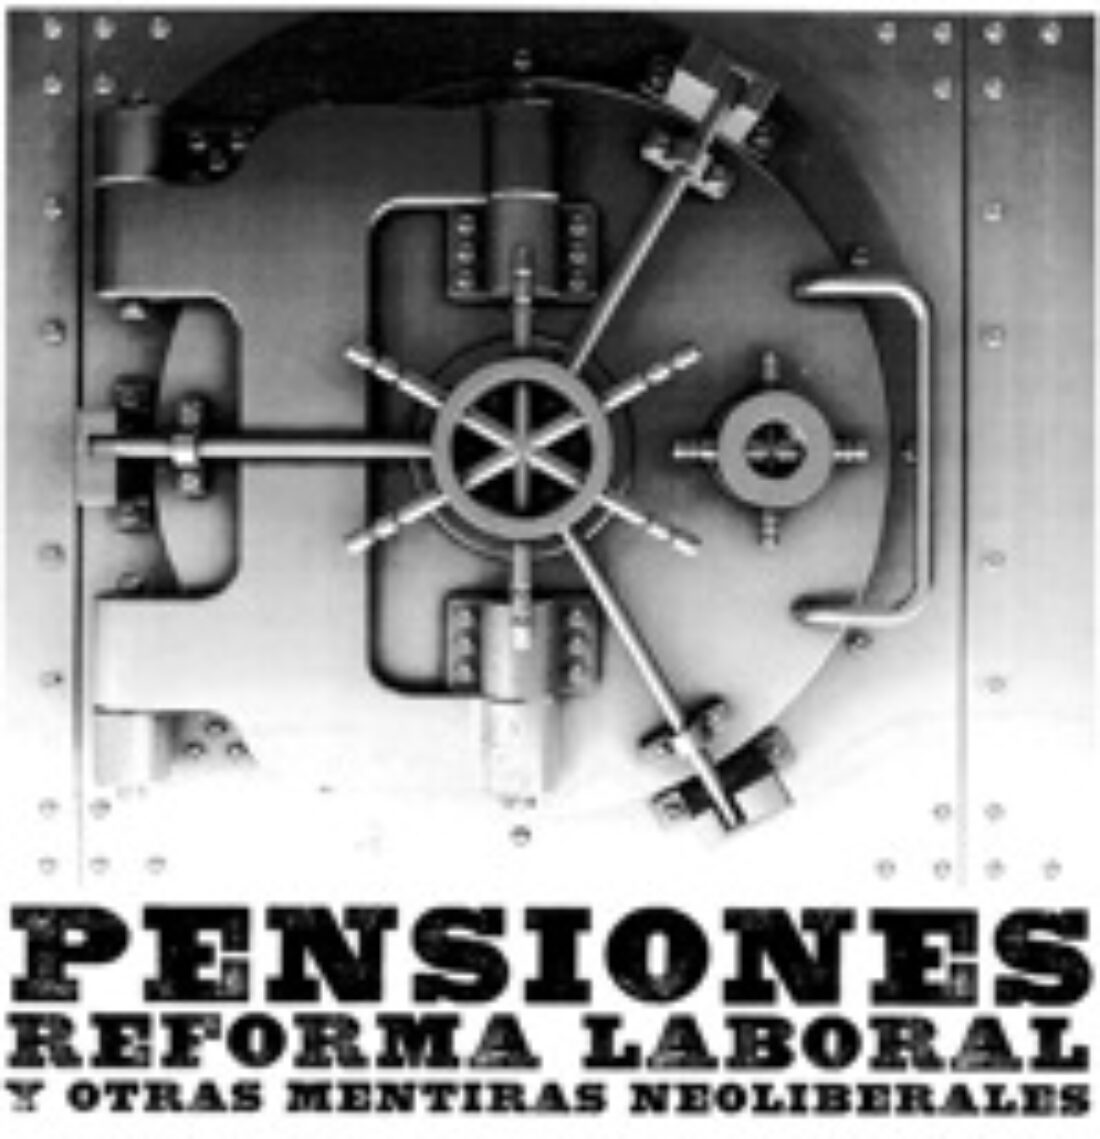 21 enero, Zaragoza : Charla con Miren Etxezarreta «Pensiones, reforma laboral y otras mentiras neoliberales»